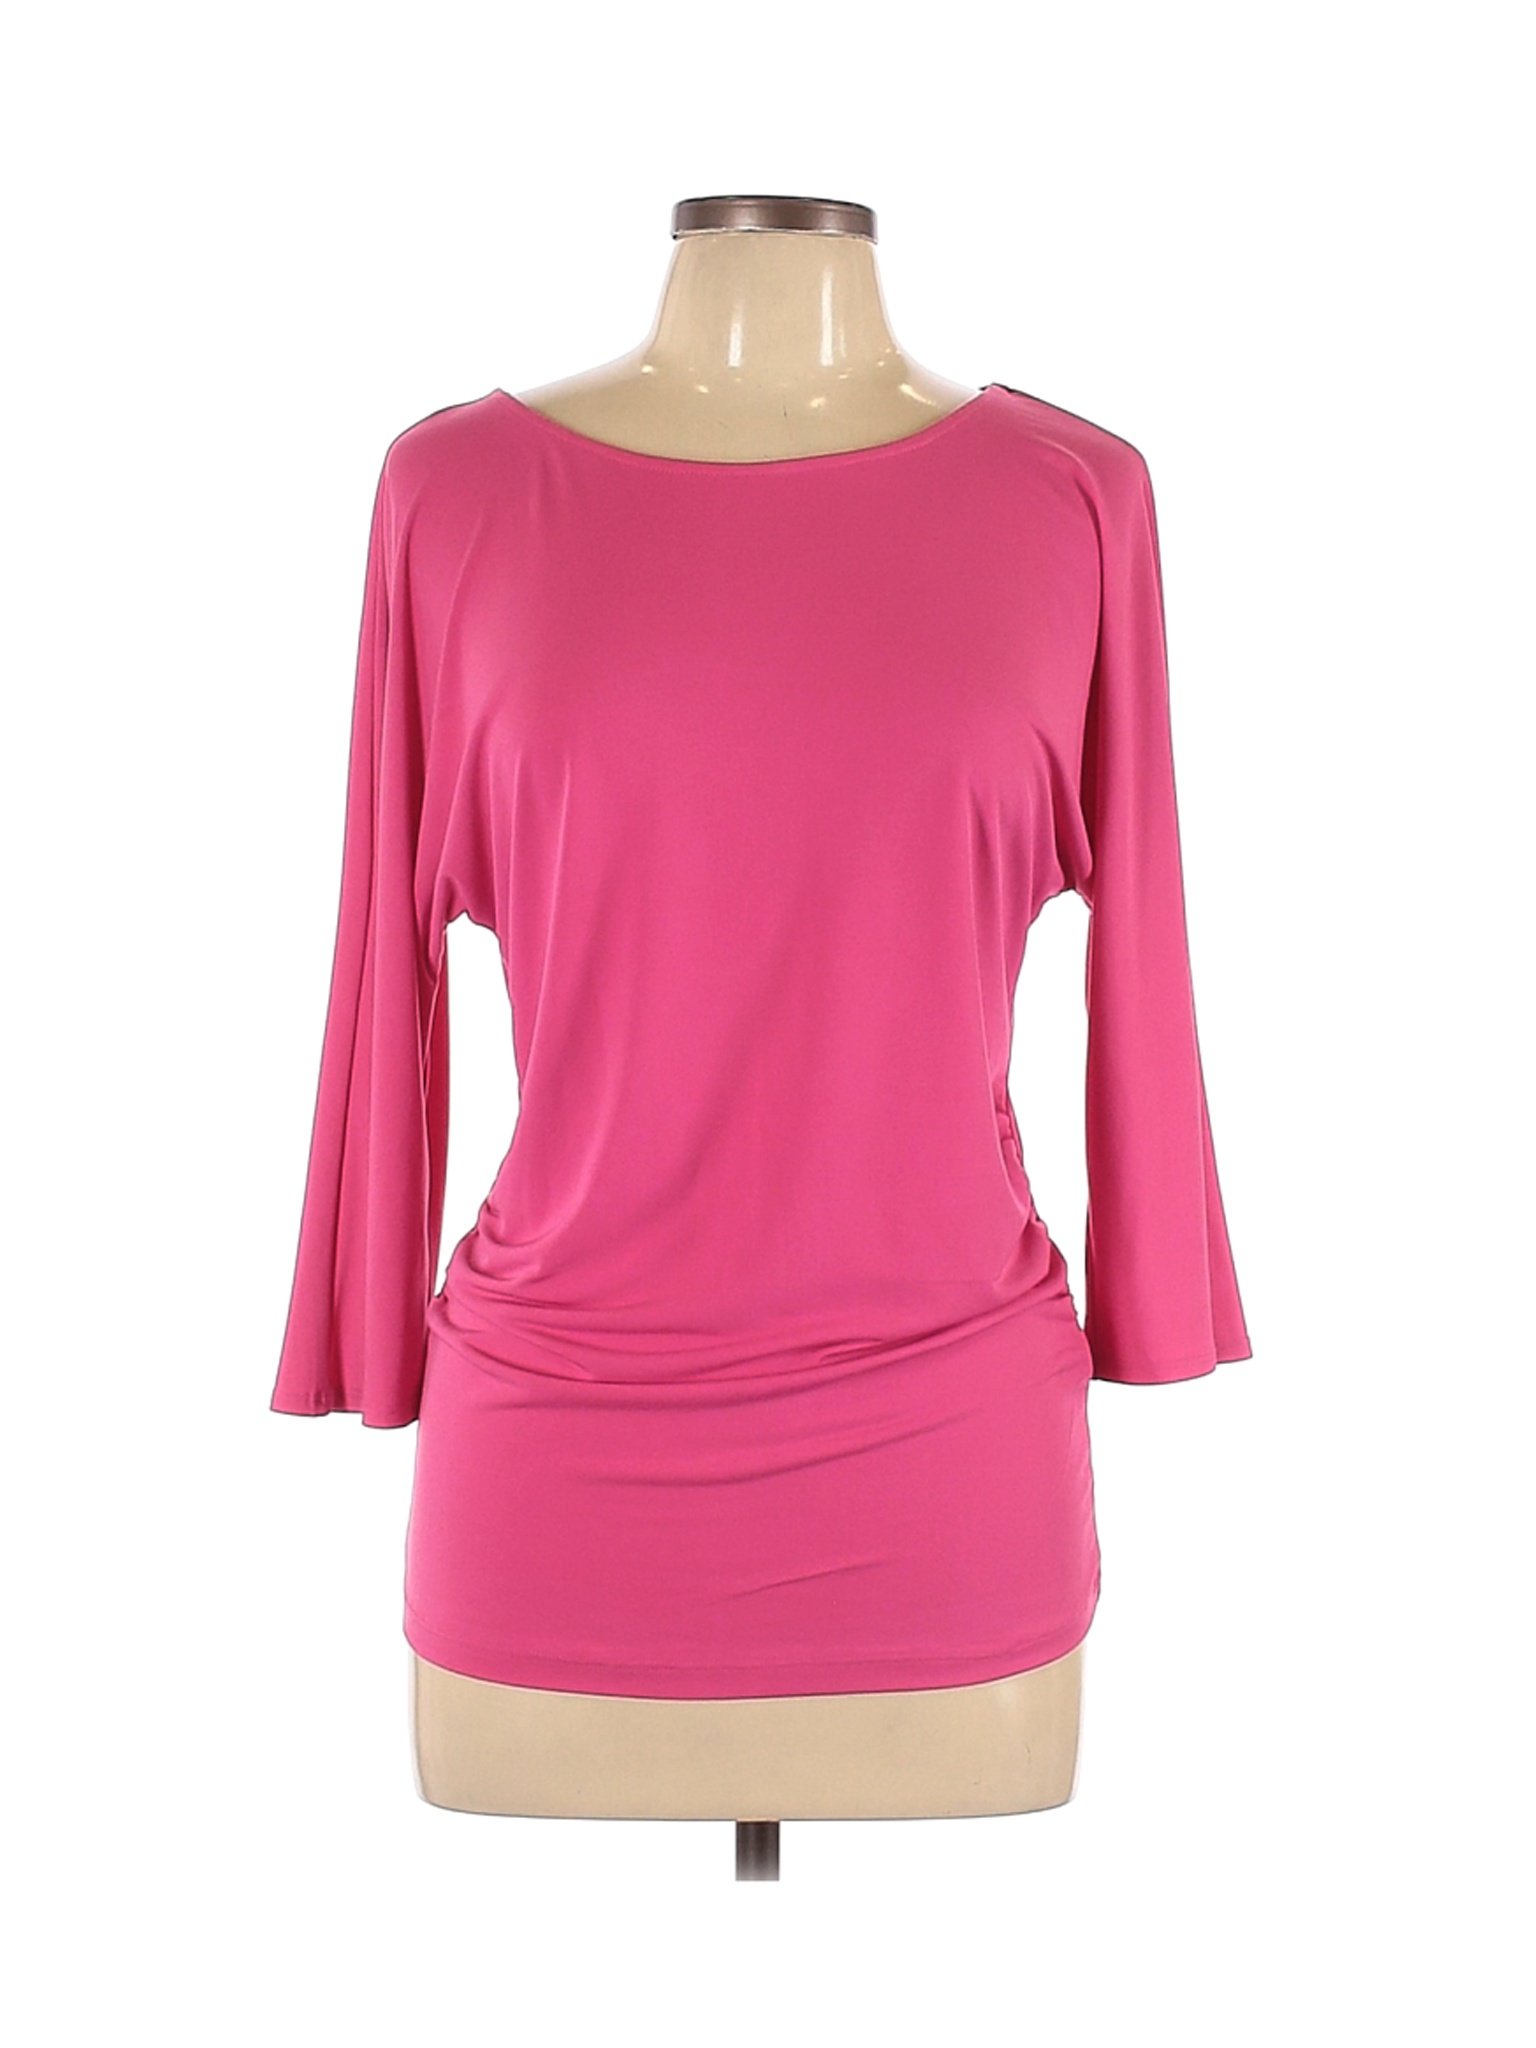 New York & Company Women Pink 3/4 Sleeve Top M | eBay